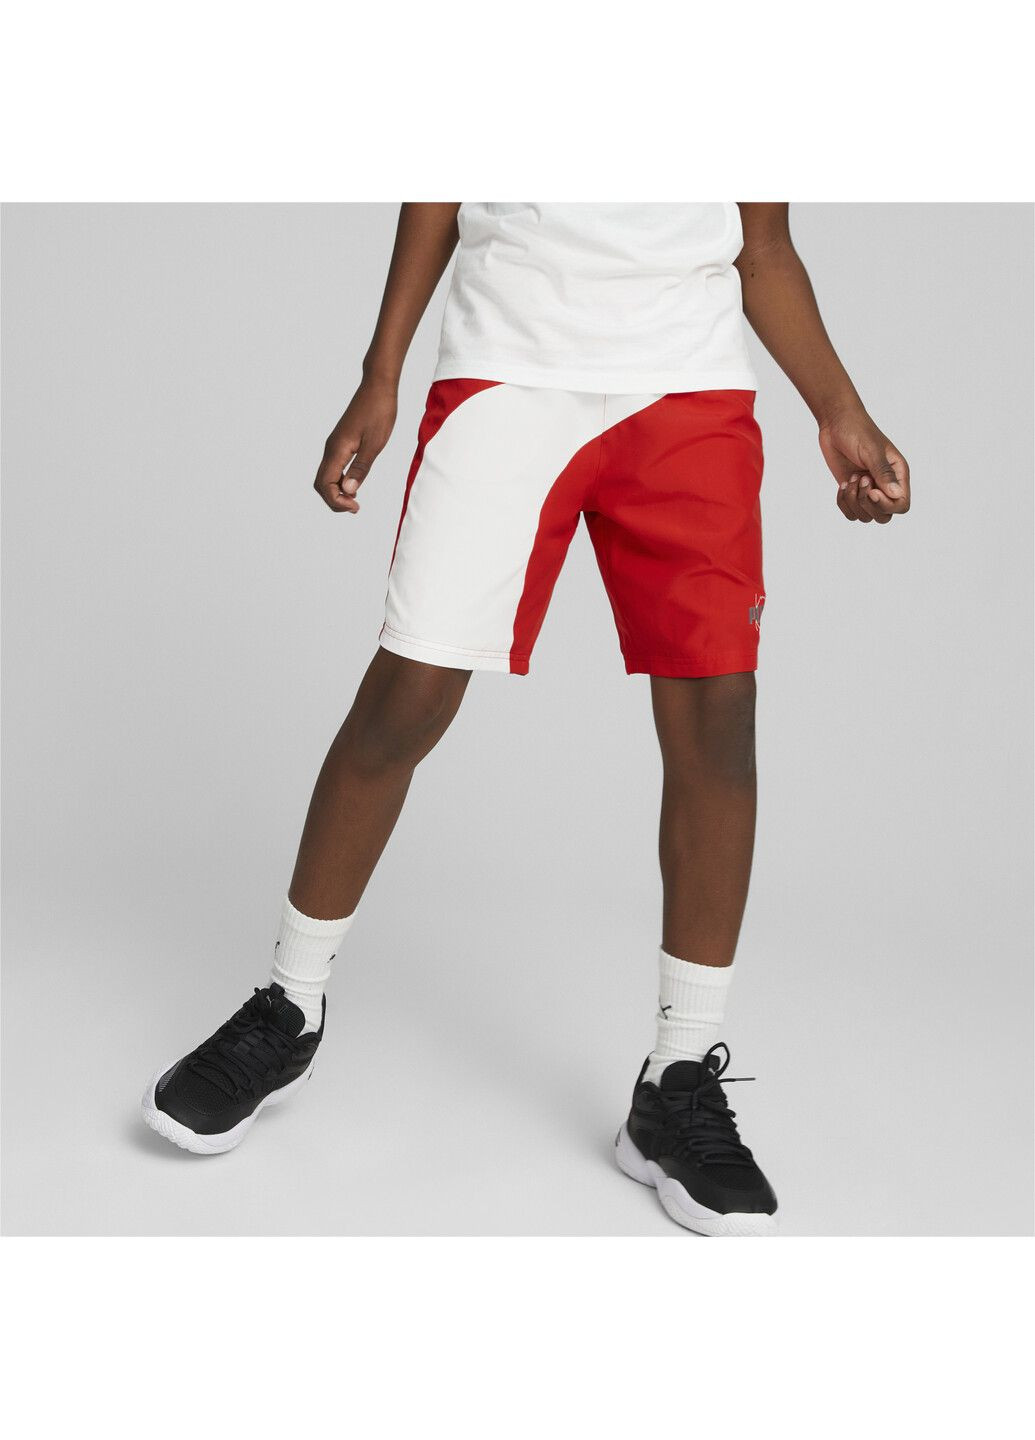 Дитячі шорти Clyde Basketball Shorts Youth Puma (282838326)